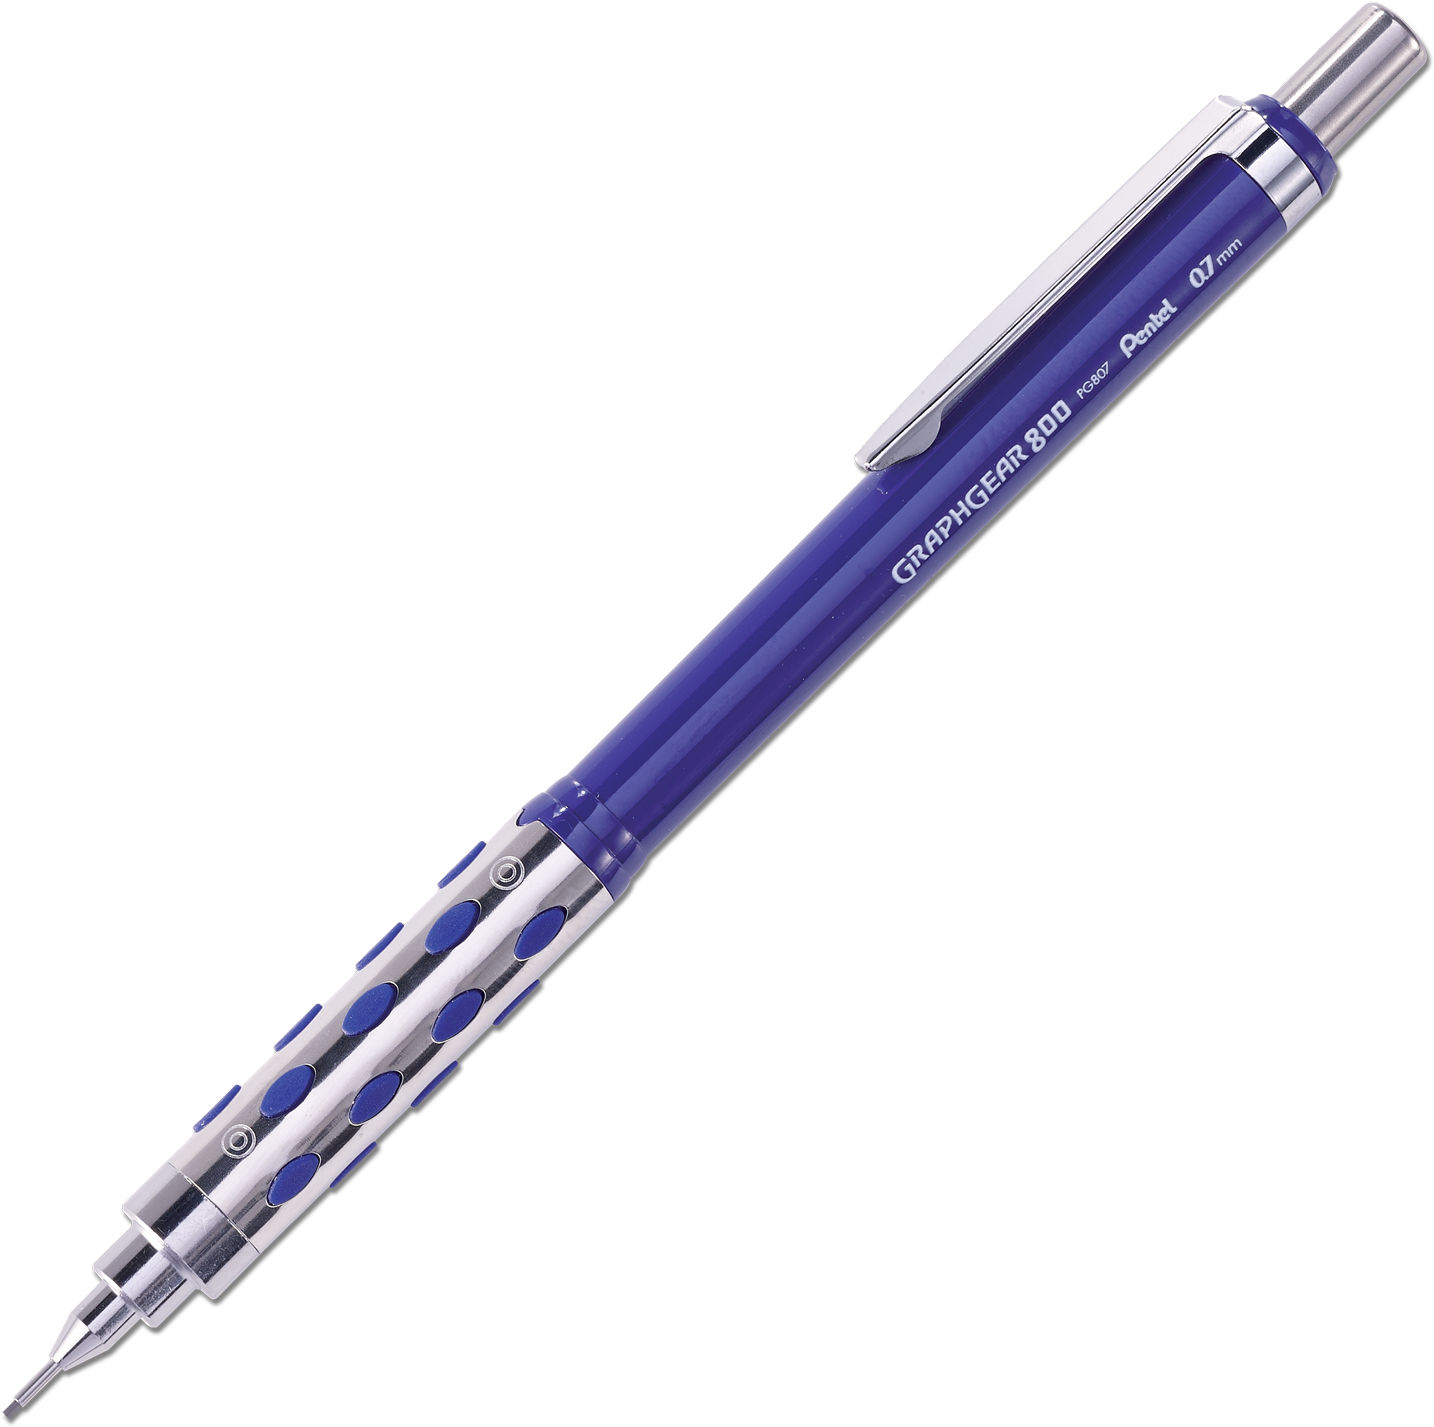 Graphgear 800 Premium Mechanical Pencil - Bic Gelocity Quick Dry (1500x1500)